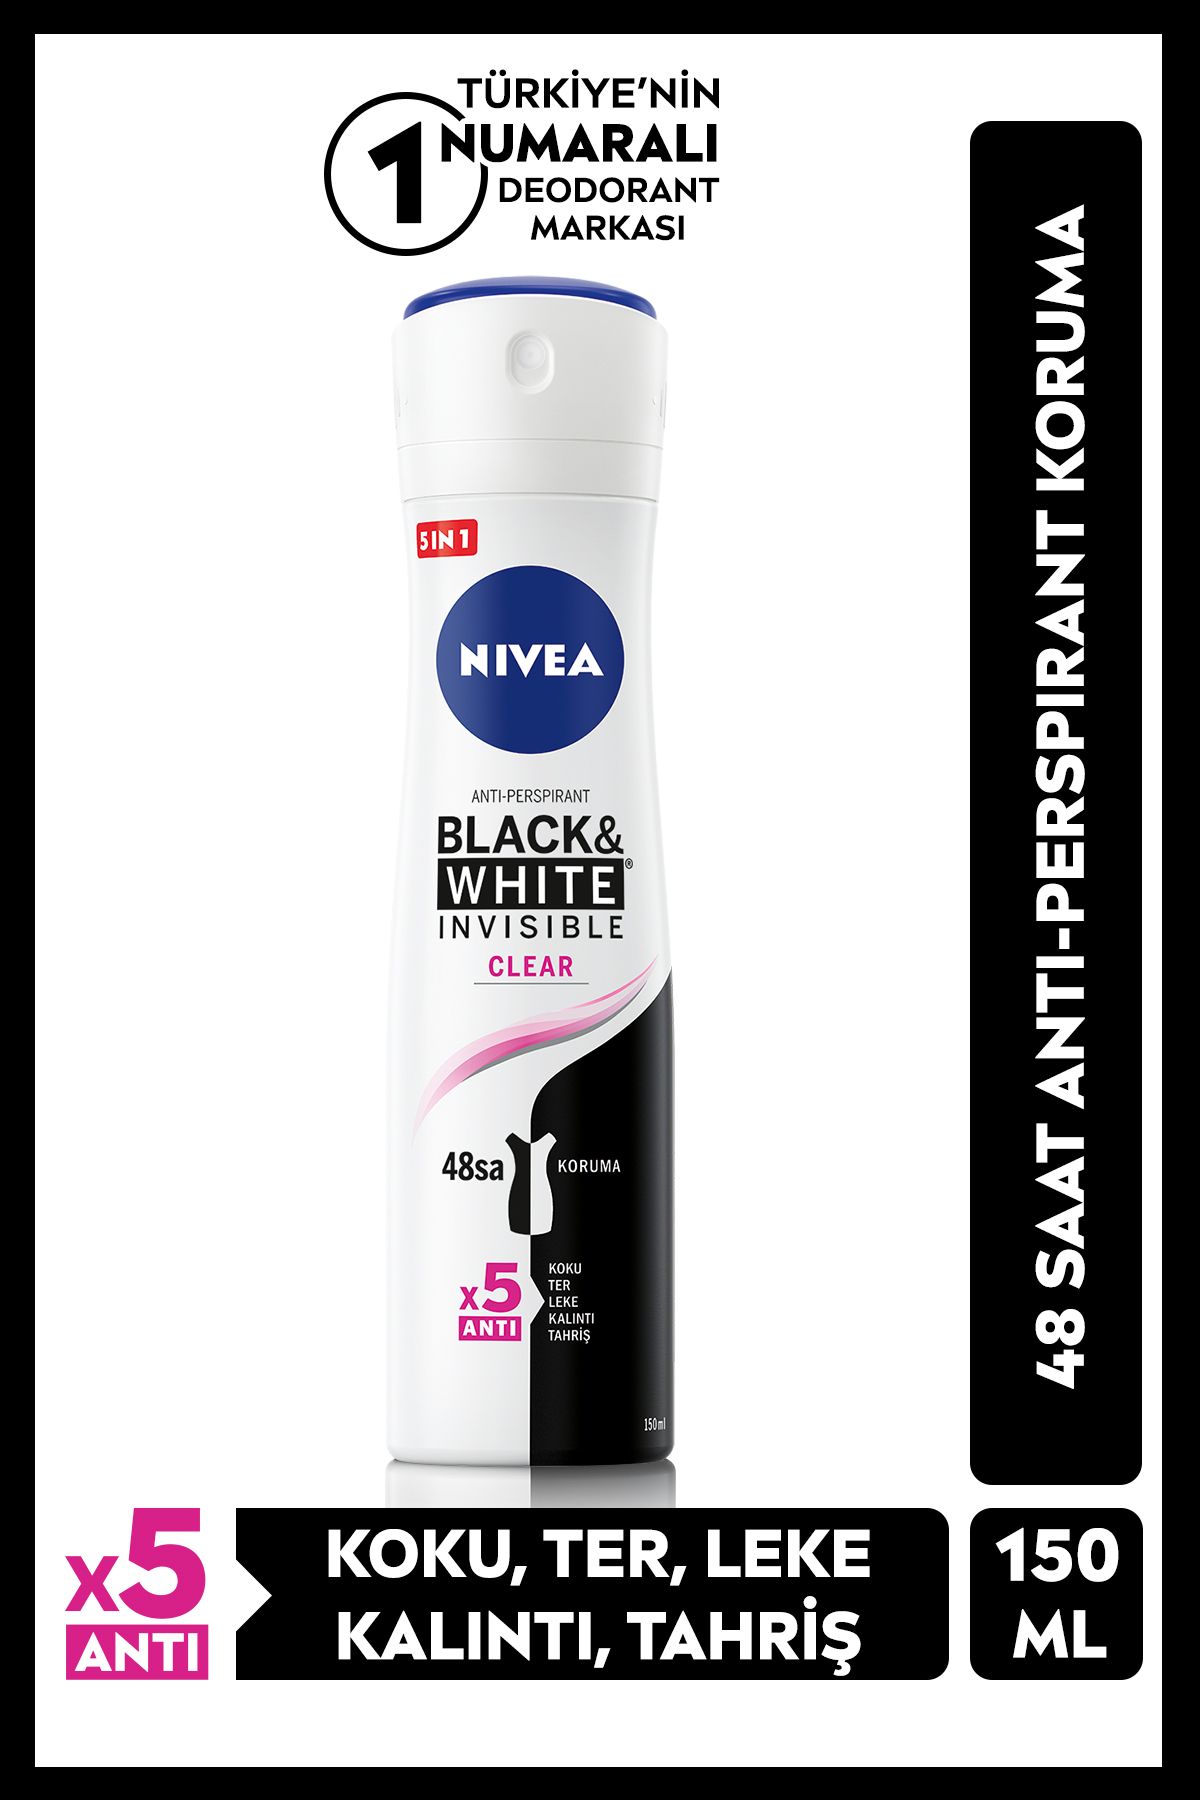 NIVEA Kadın Sprey Deodorant Black&white Invisible Clear 150ml, 48 Saat Anti-perspirant, Ter Kokusu